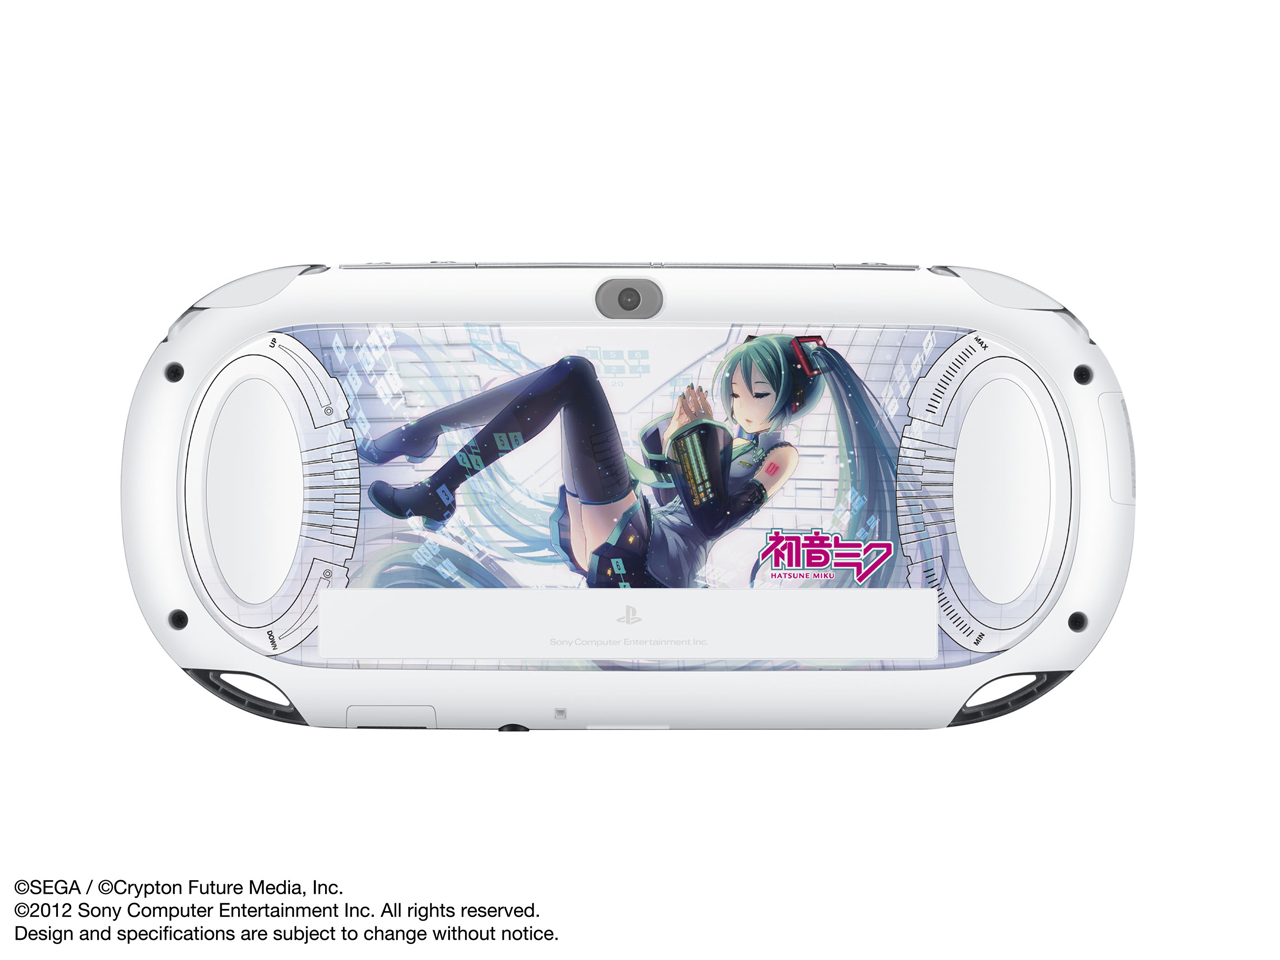 PlayStation Vita (プレイステーション ヴィータ) 初音ミク Limited Edition 3G/Wi-Fiモデル PCHJ-10001